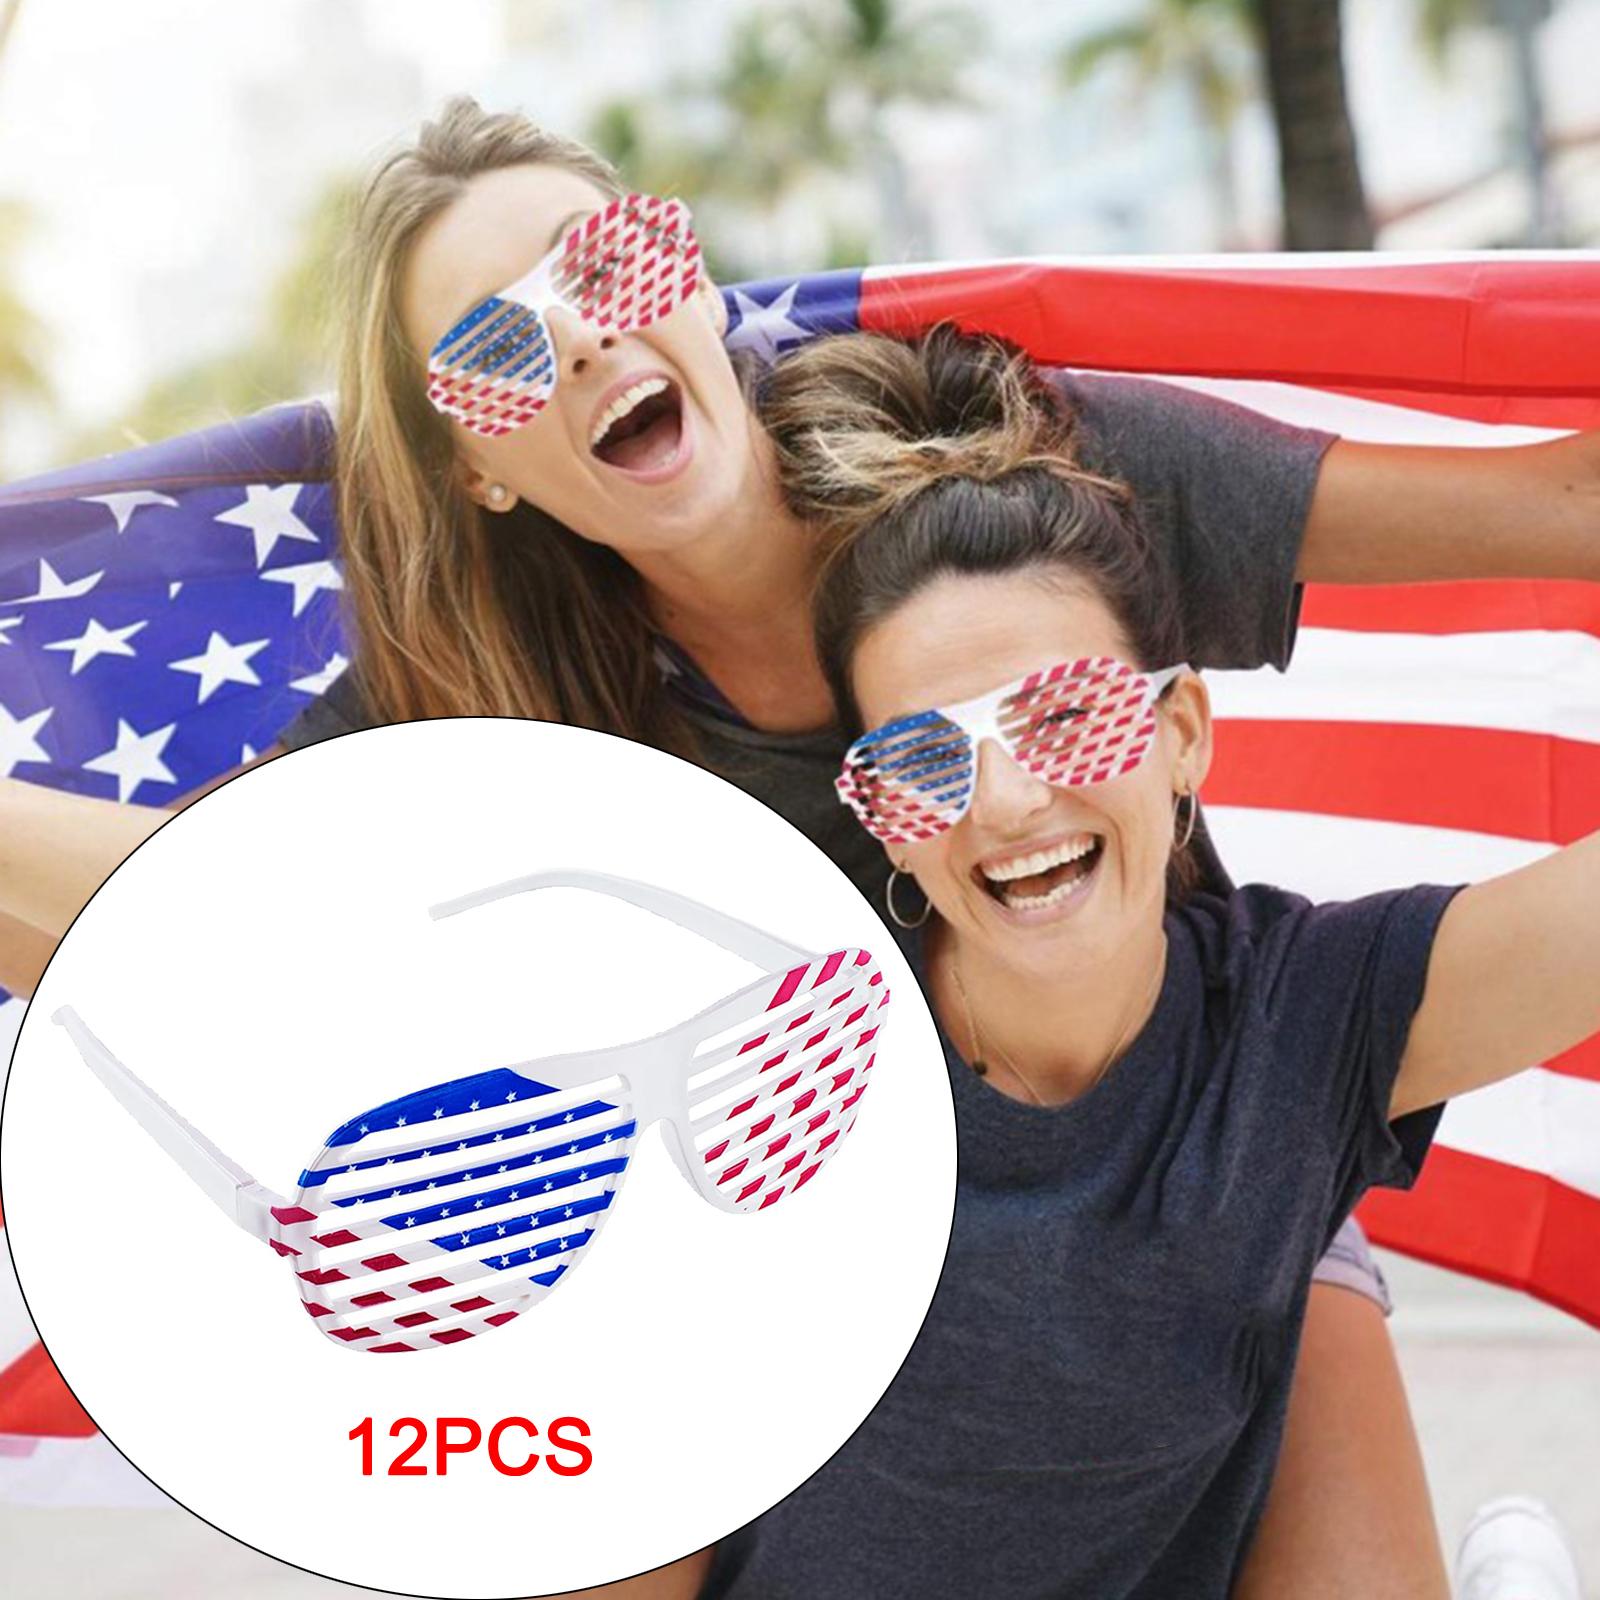 Pack of 12 Novelty USA American Flag Plastic Shutter Glasses Photo Props